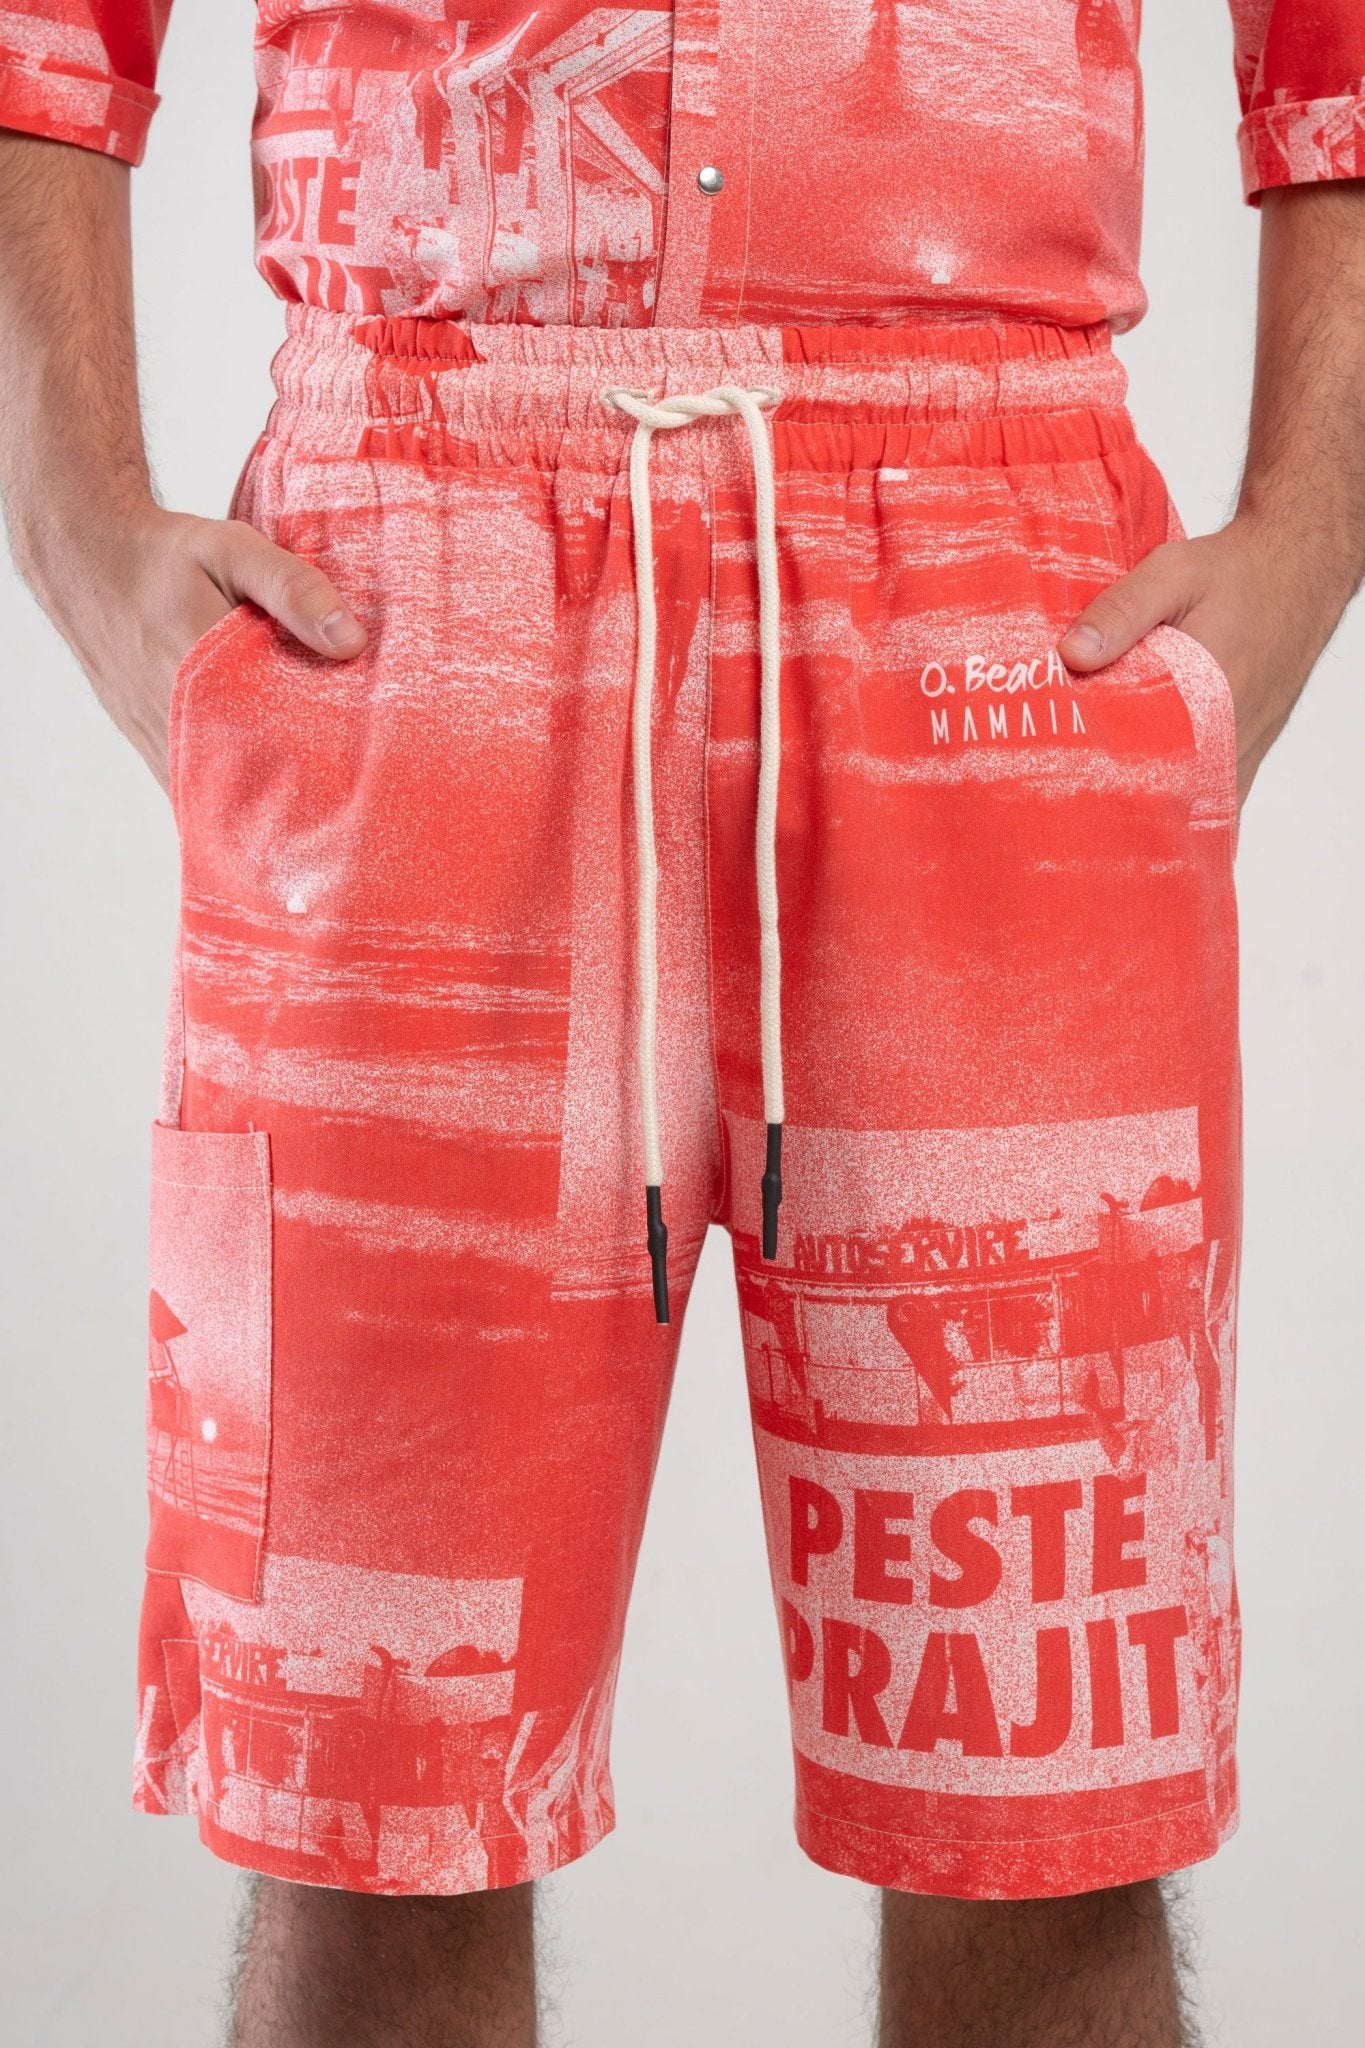 Set Short Sleeve Shirt & Bermuda O.Beach Mamaia (recycled fabric) - mysimplicated